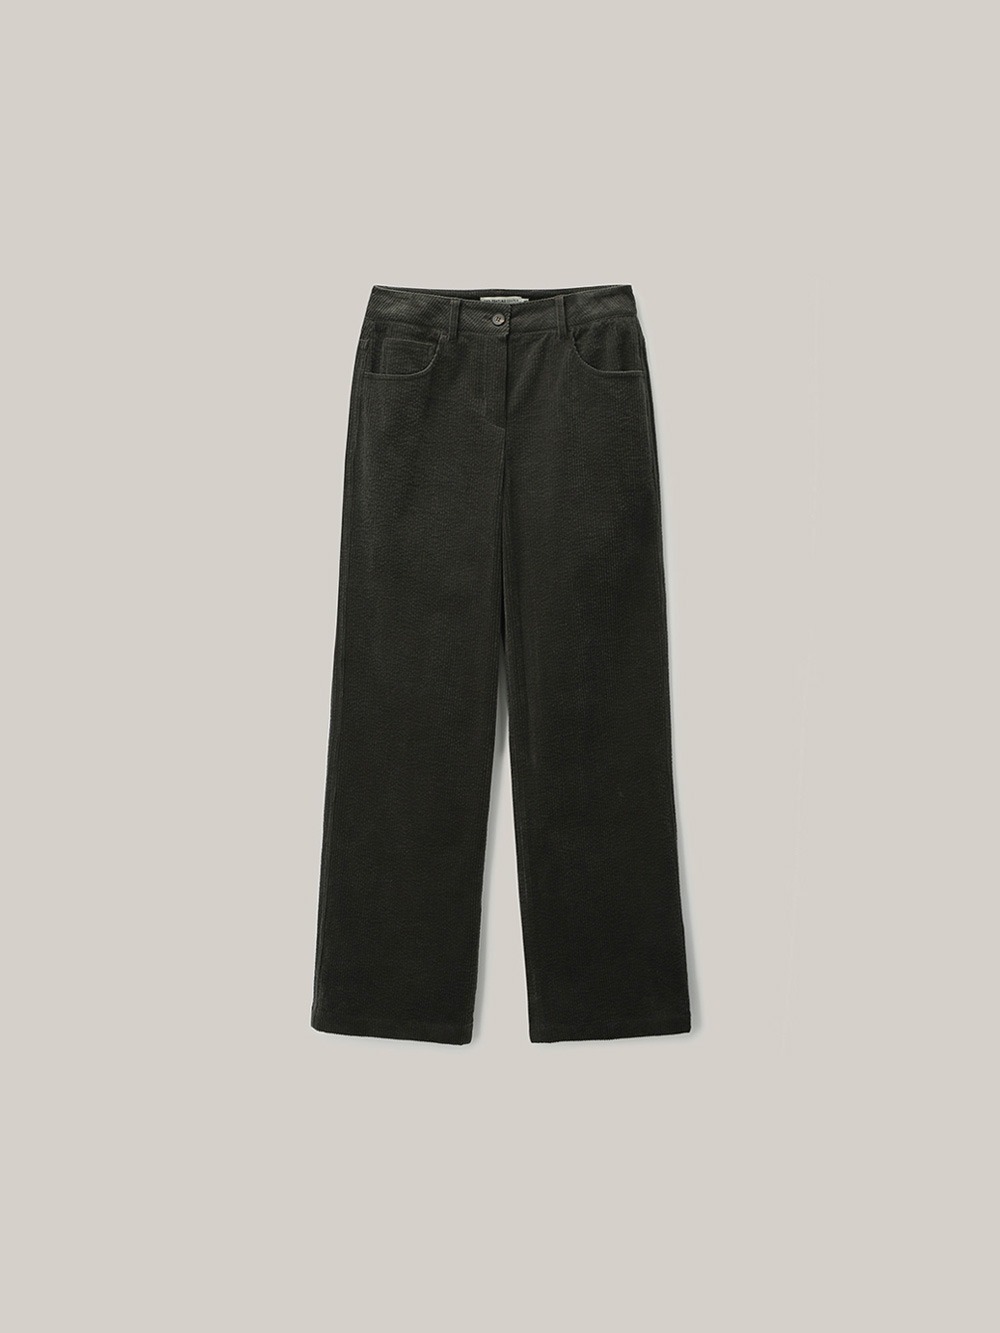 Classic Corduroy Pants (moss khaki)